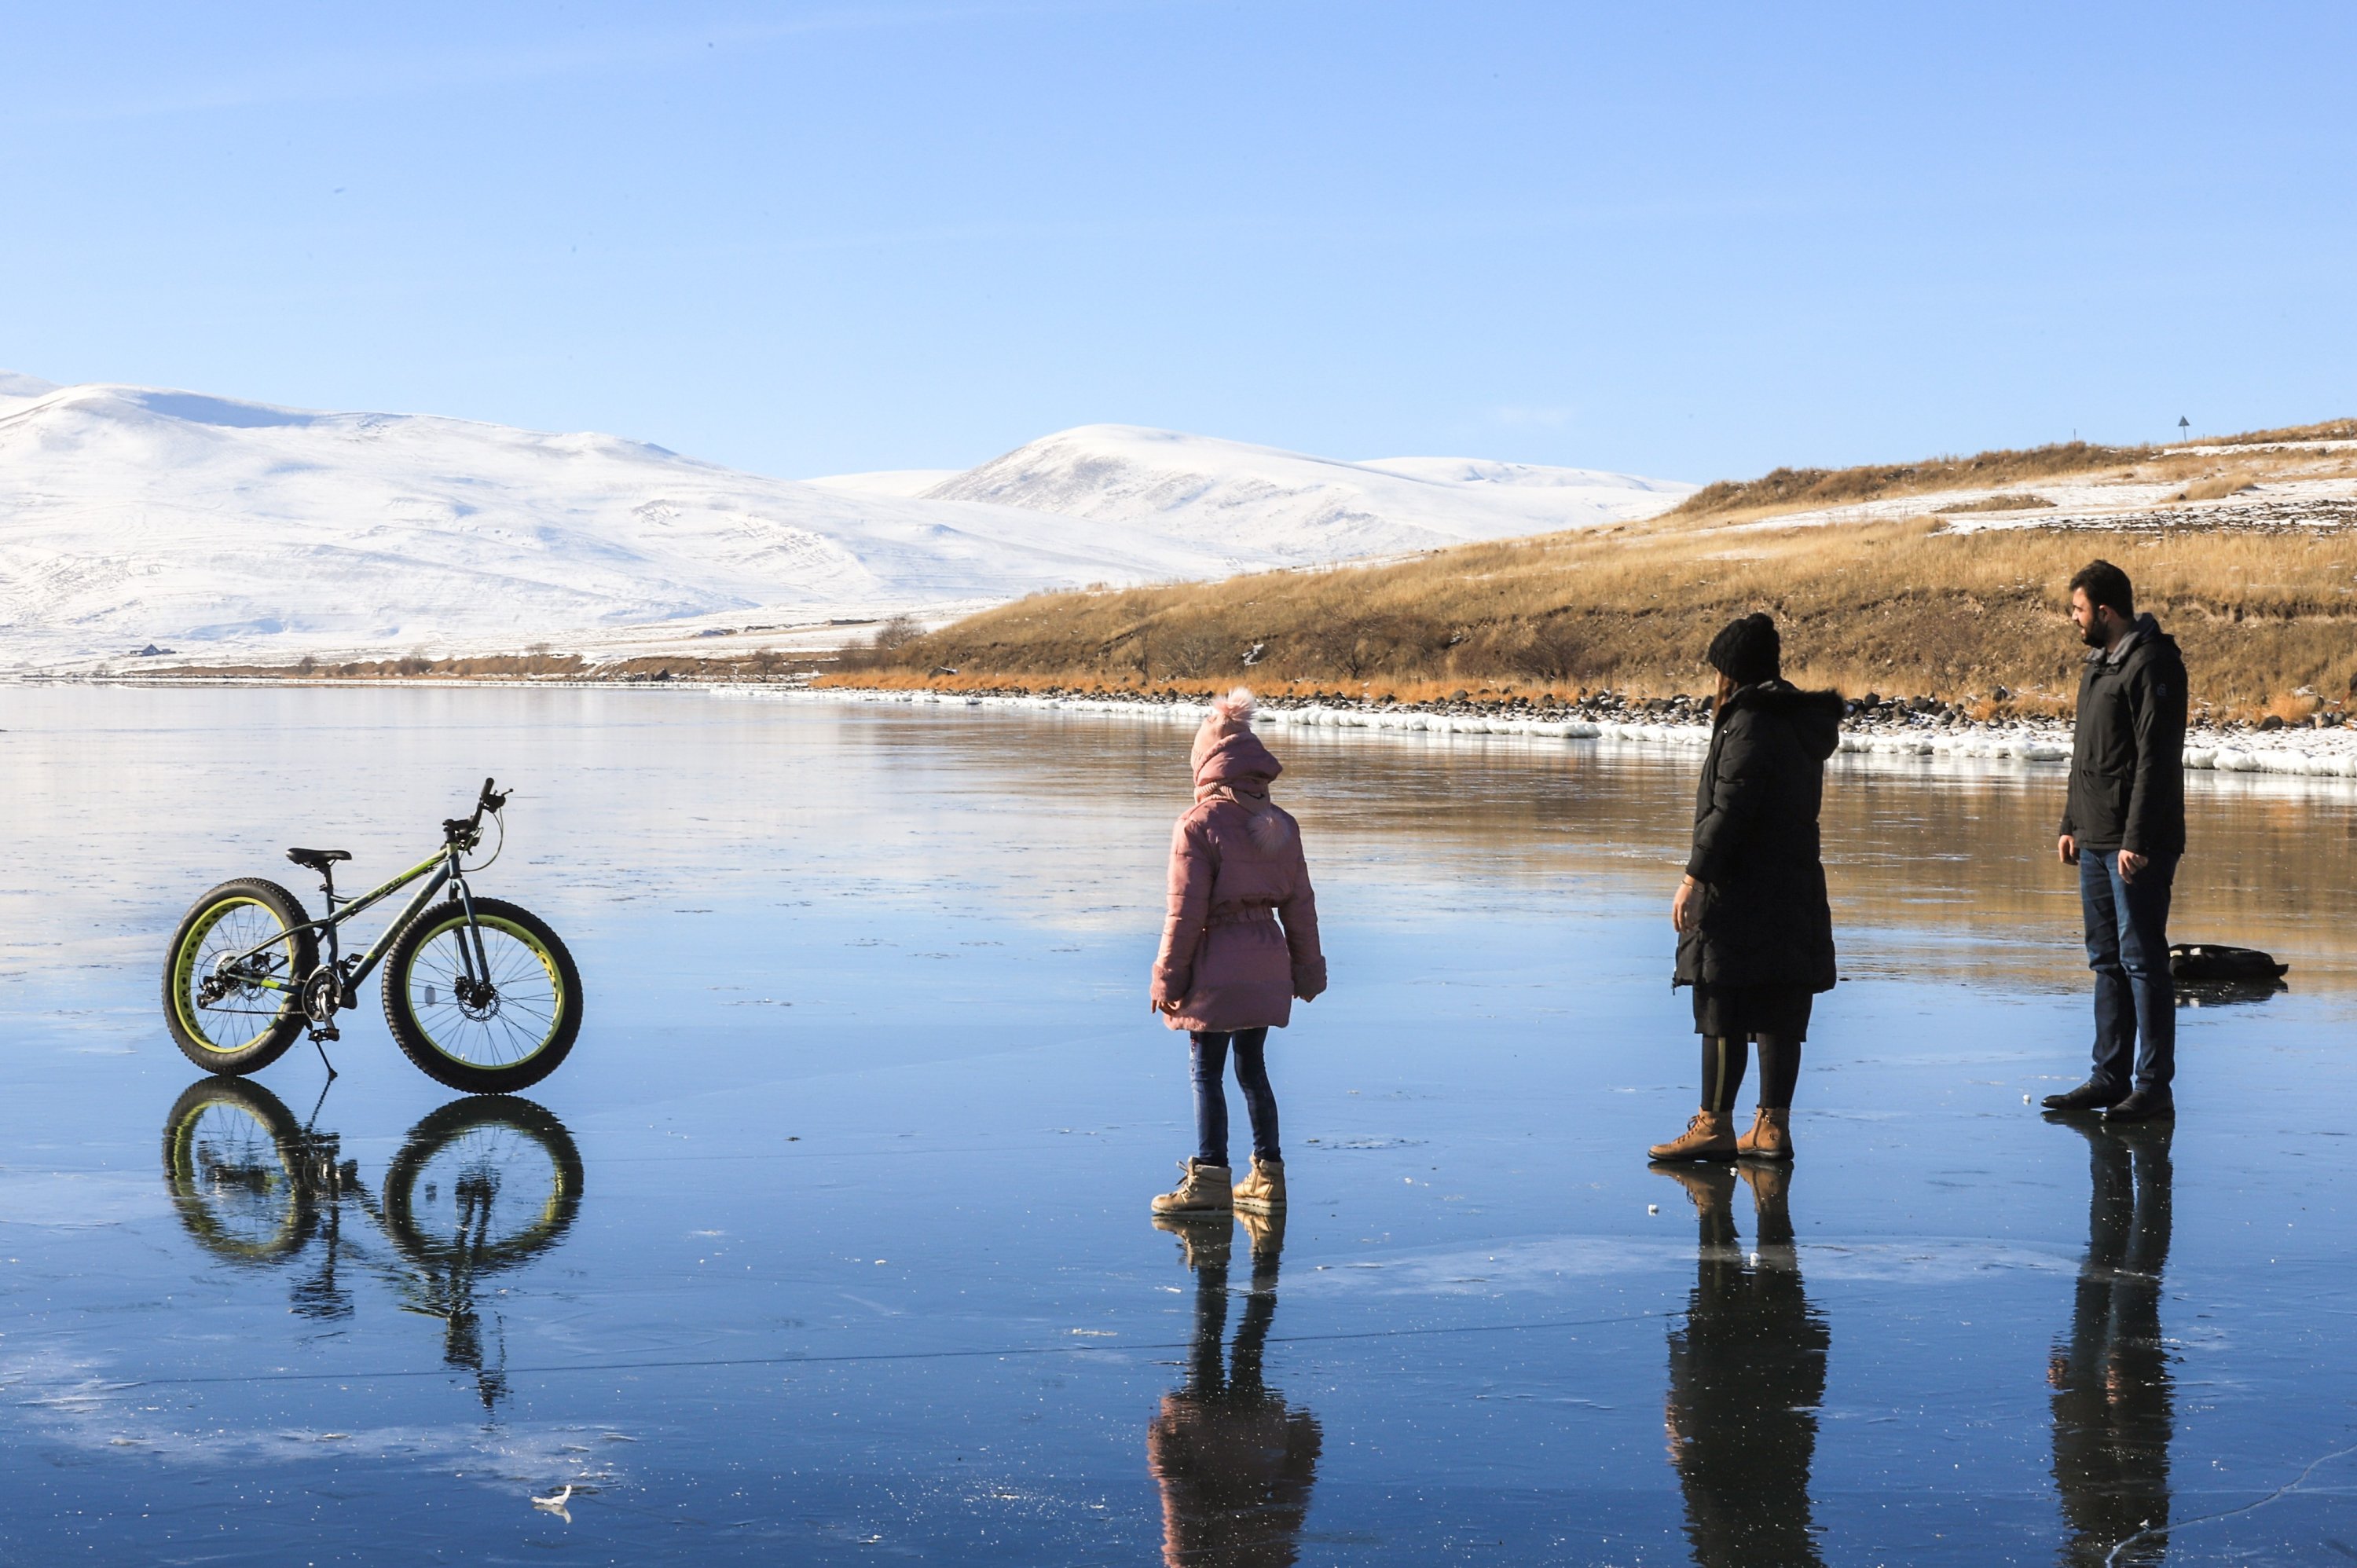 People stand next to a bicycle on the glassy surface of Lake Çıldır in the Çıldır district of Ardahan province, eastern Turkey, Dec. 28, 2020. (IHA Photo)